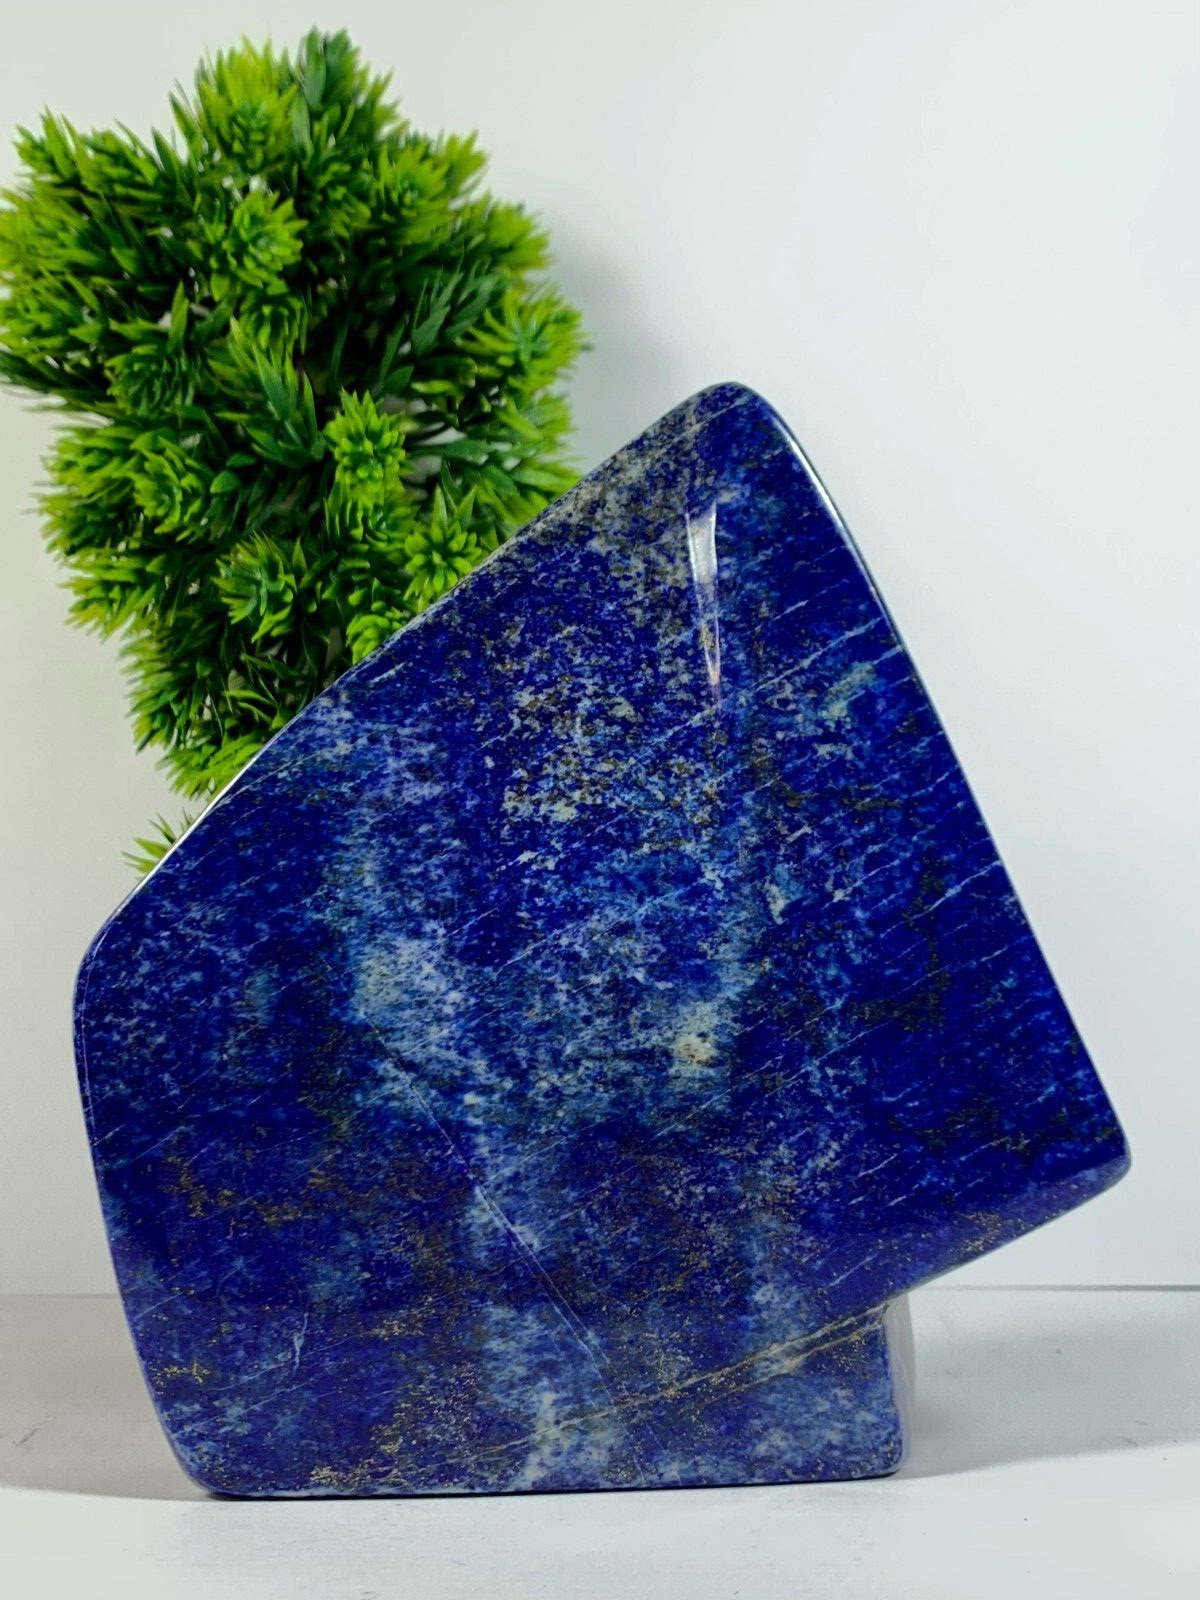 1500Gram Grade AAA+ Lapis Lazuli Tumbled Stone, Rough Polished, Mineral Specimen